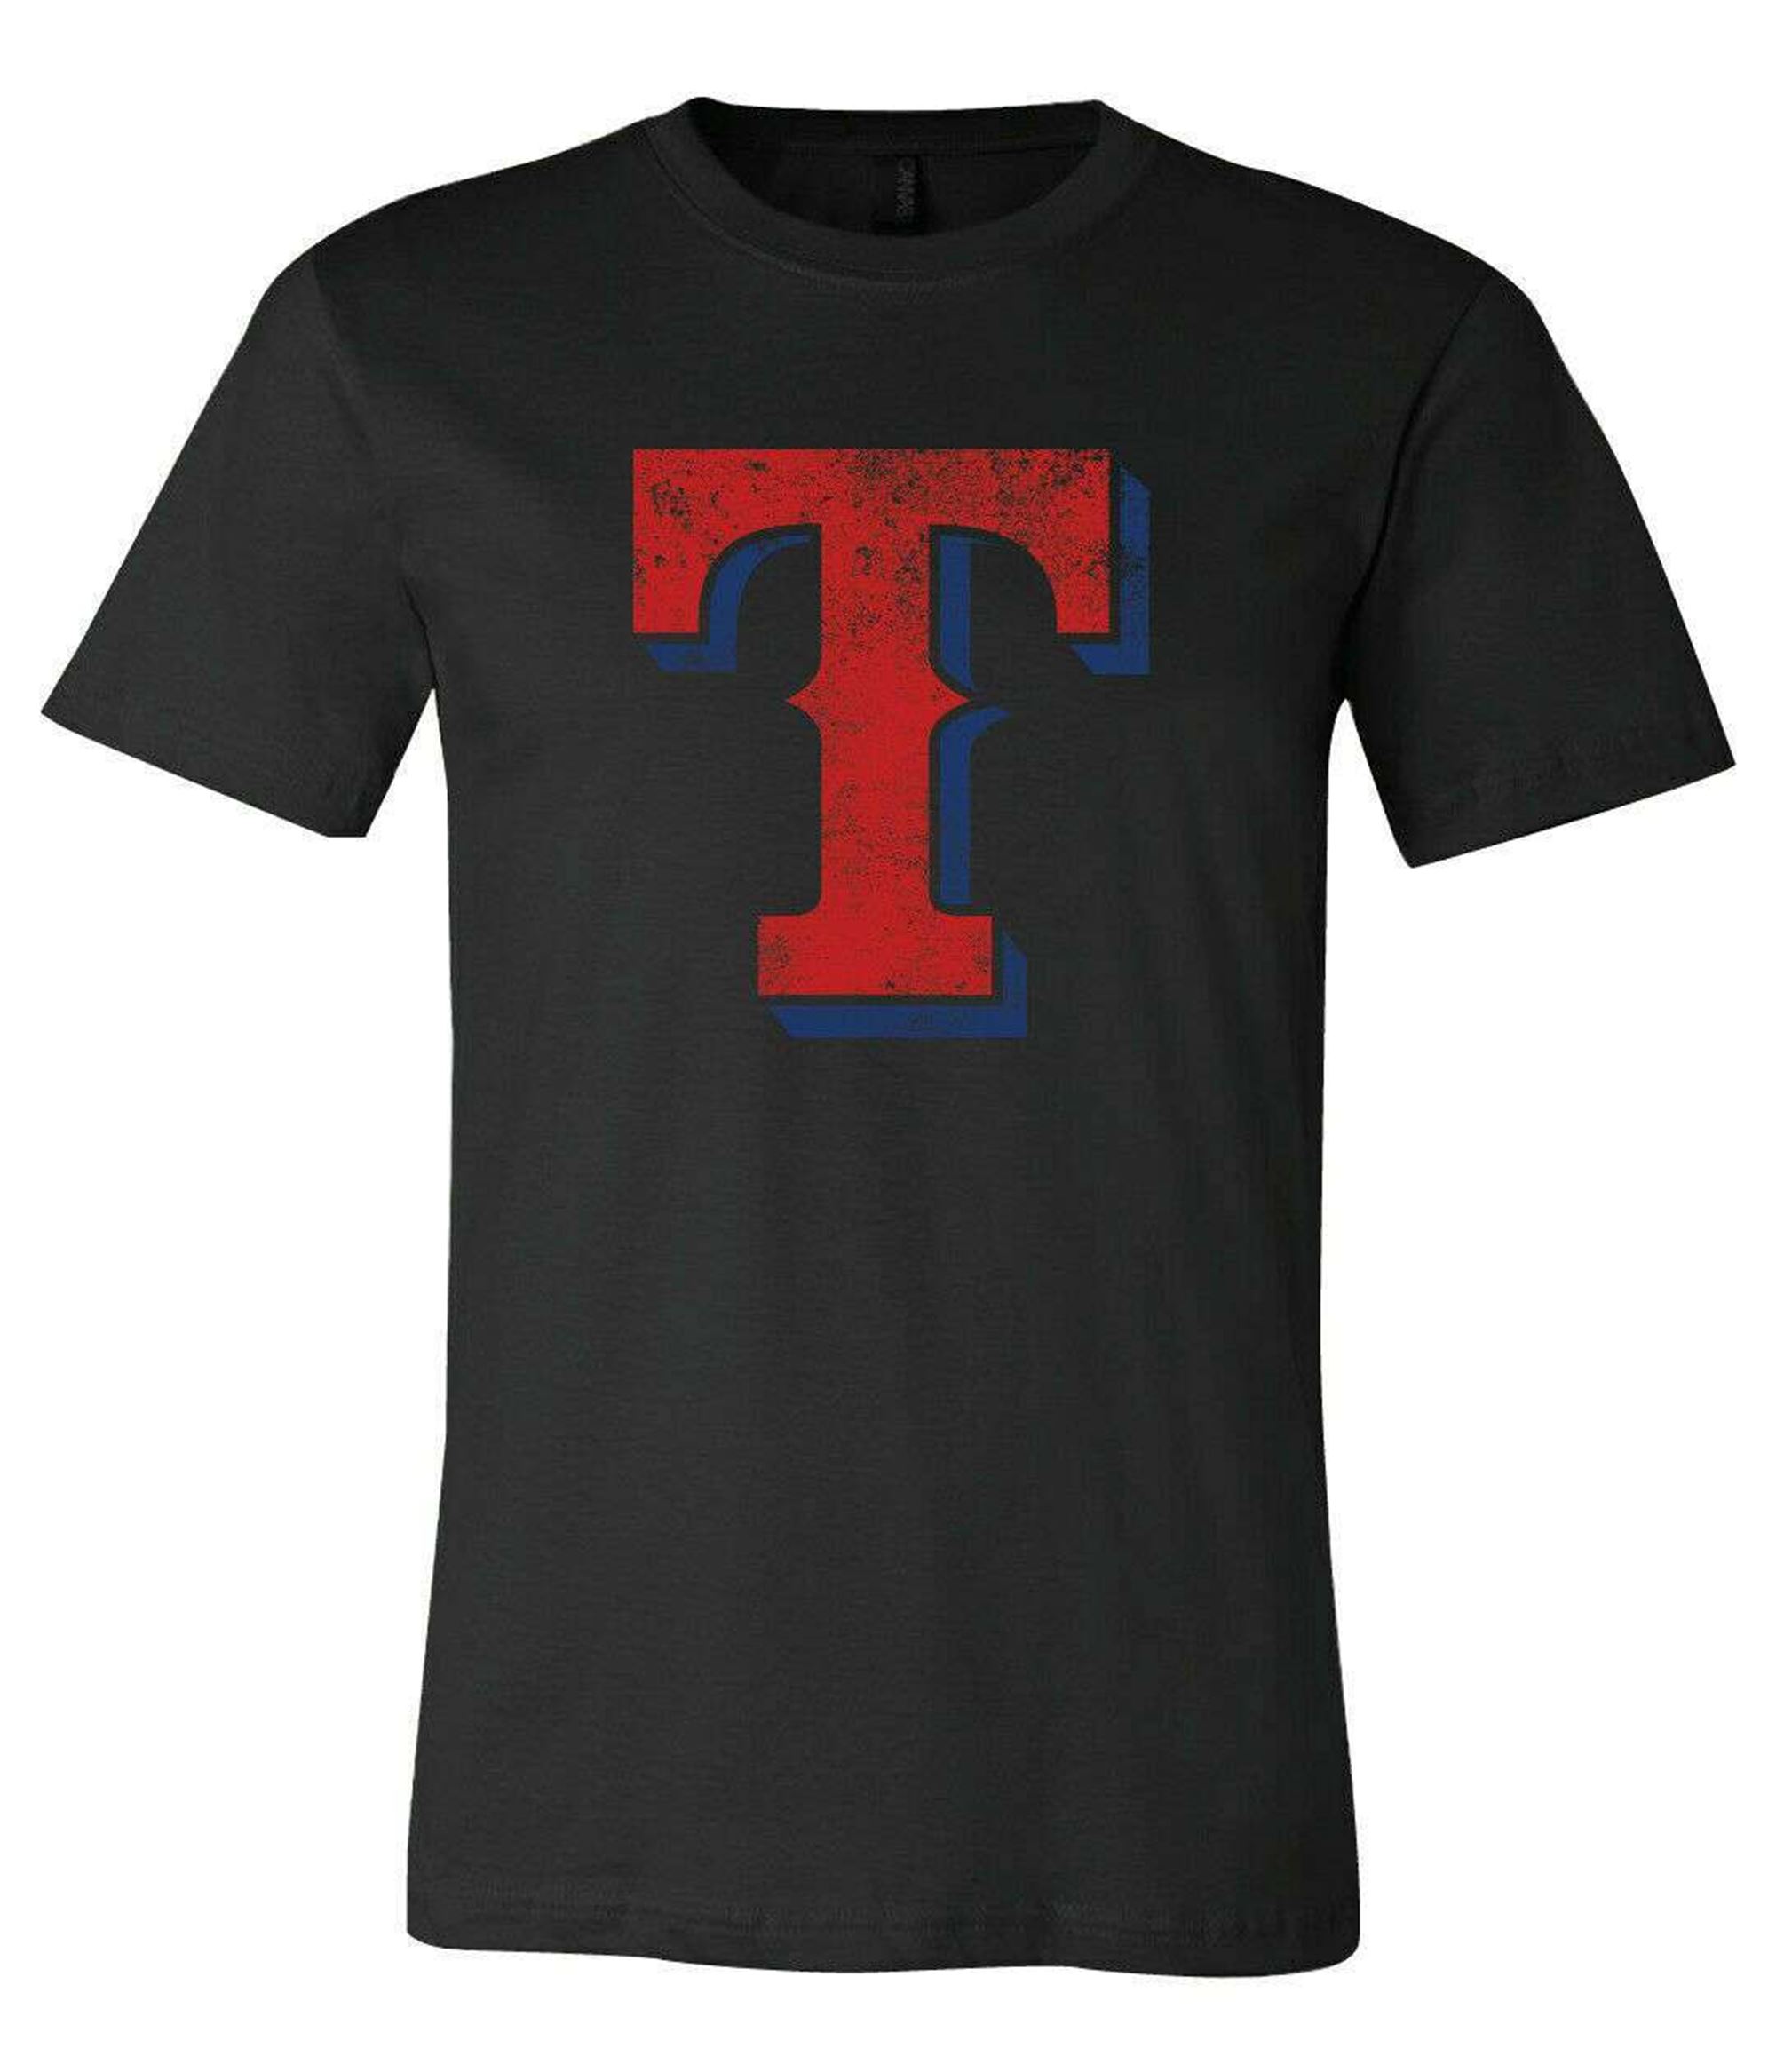 Texas Rangers Mlb Baseball T-shirt Size Up To 5xl